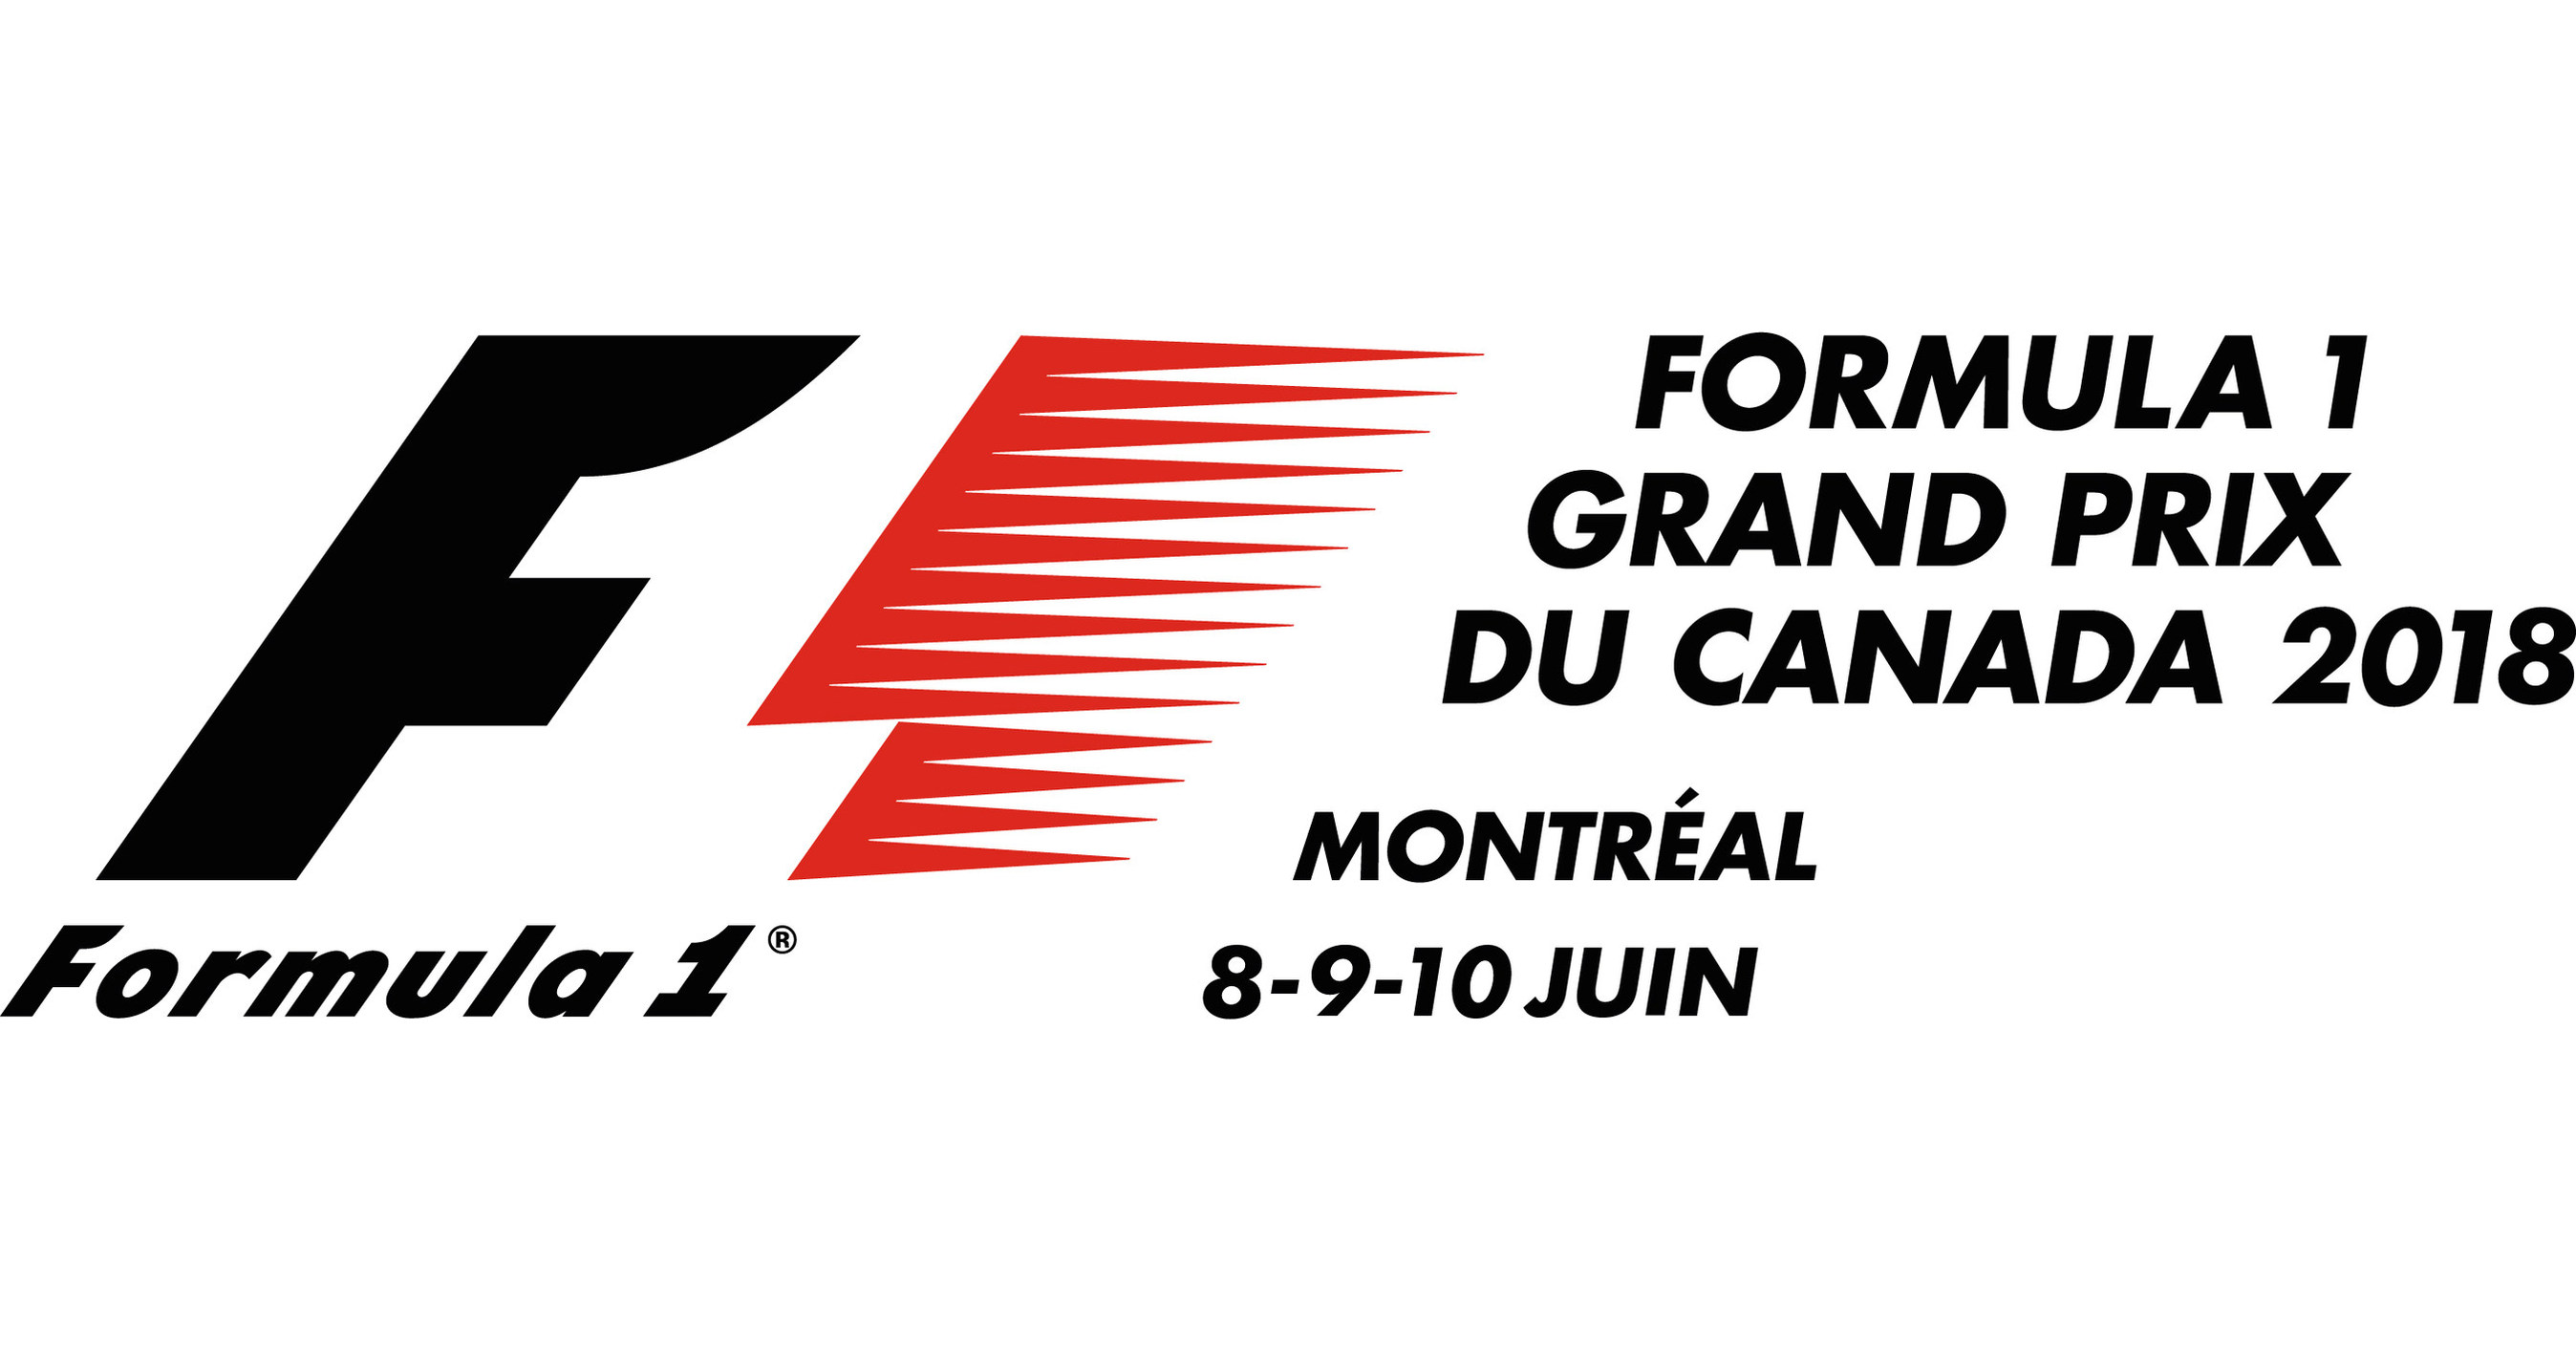 The Formula 1 Grand Prix du Canada announces that Grandstand 24 shall